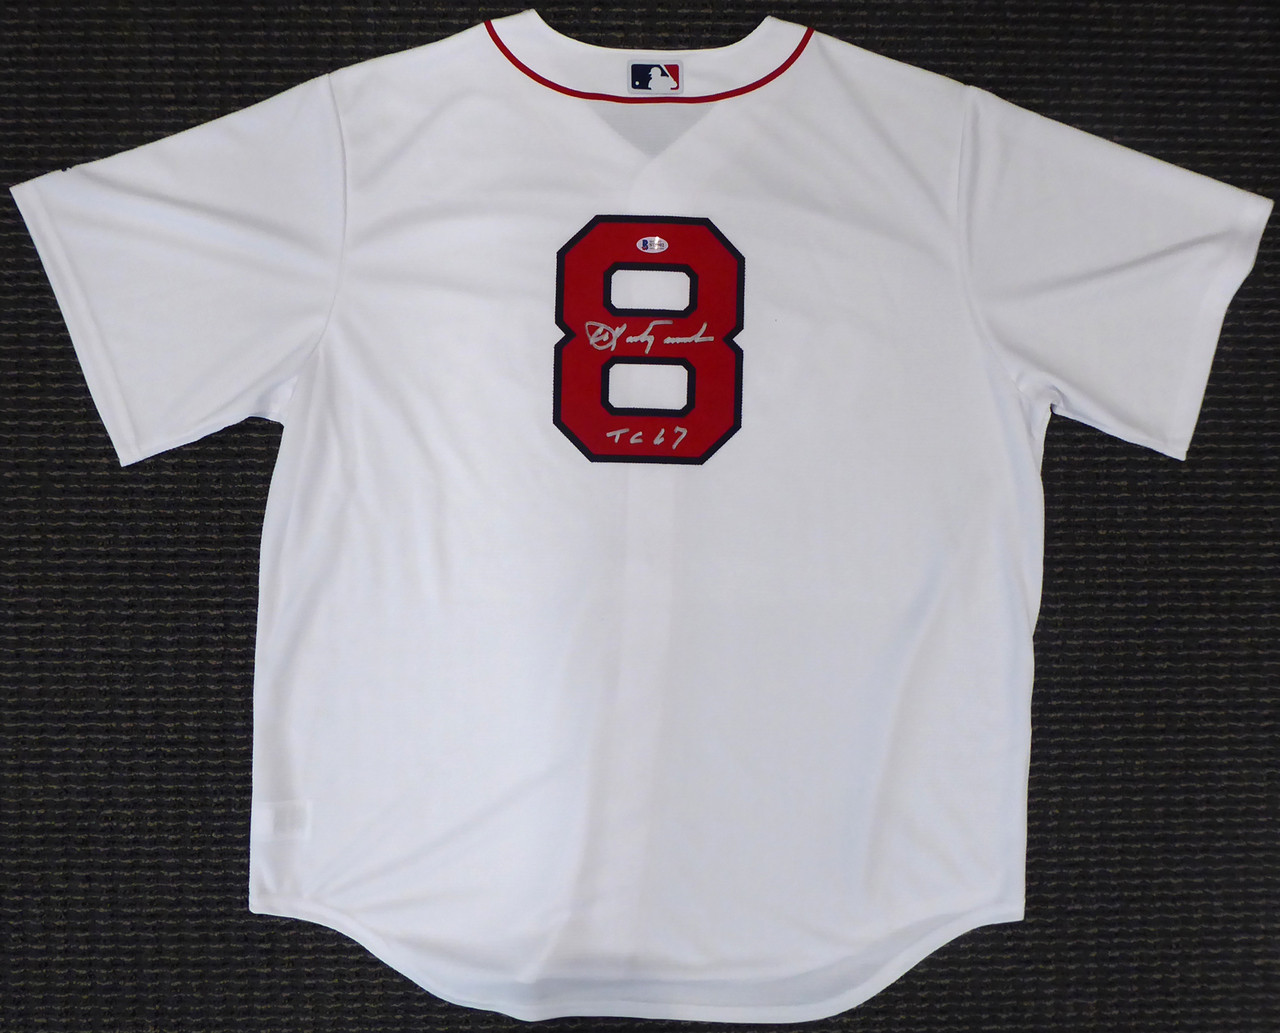 Carl Yastrzemski Autographed Jersey - Boston Red Sox White